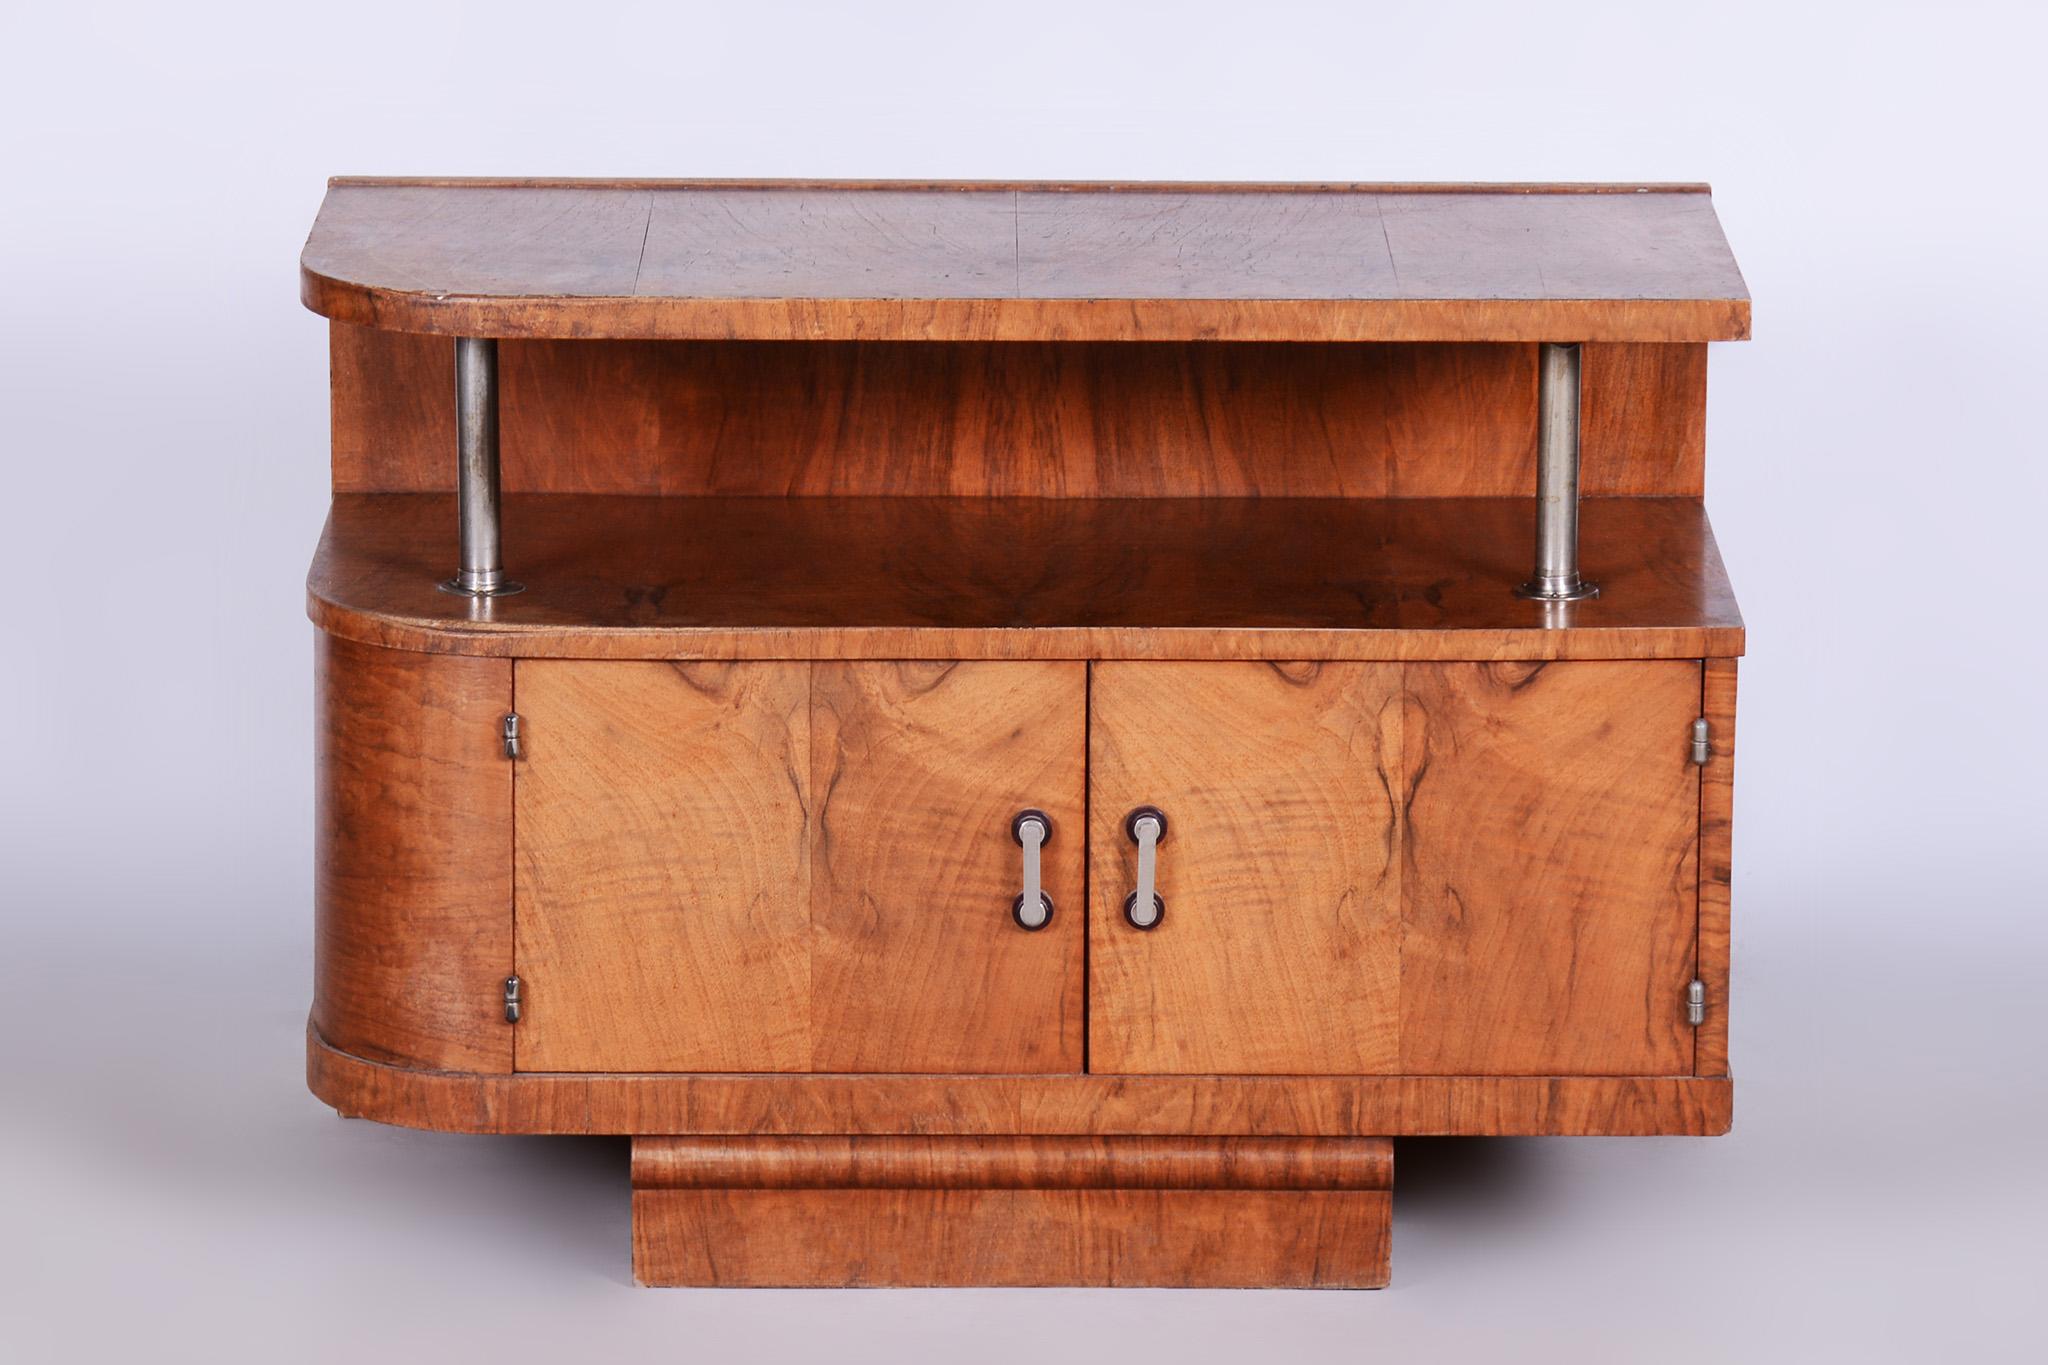 Restored Walnut ArtDeco Small Cabinet, Chrome-Plated Steel, Czechia, 1930s For Sale 2